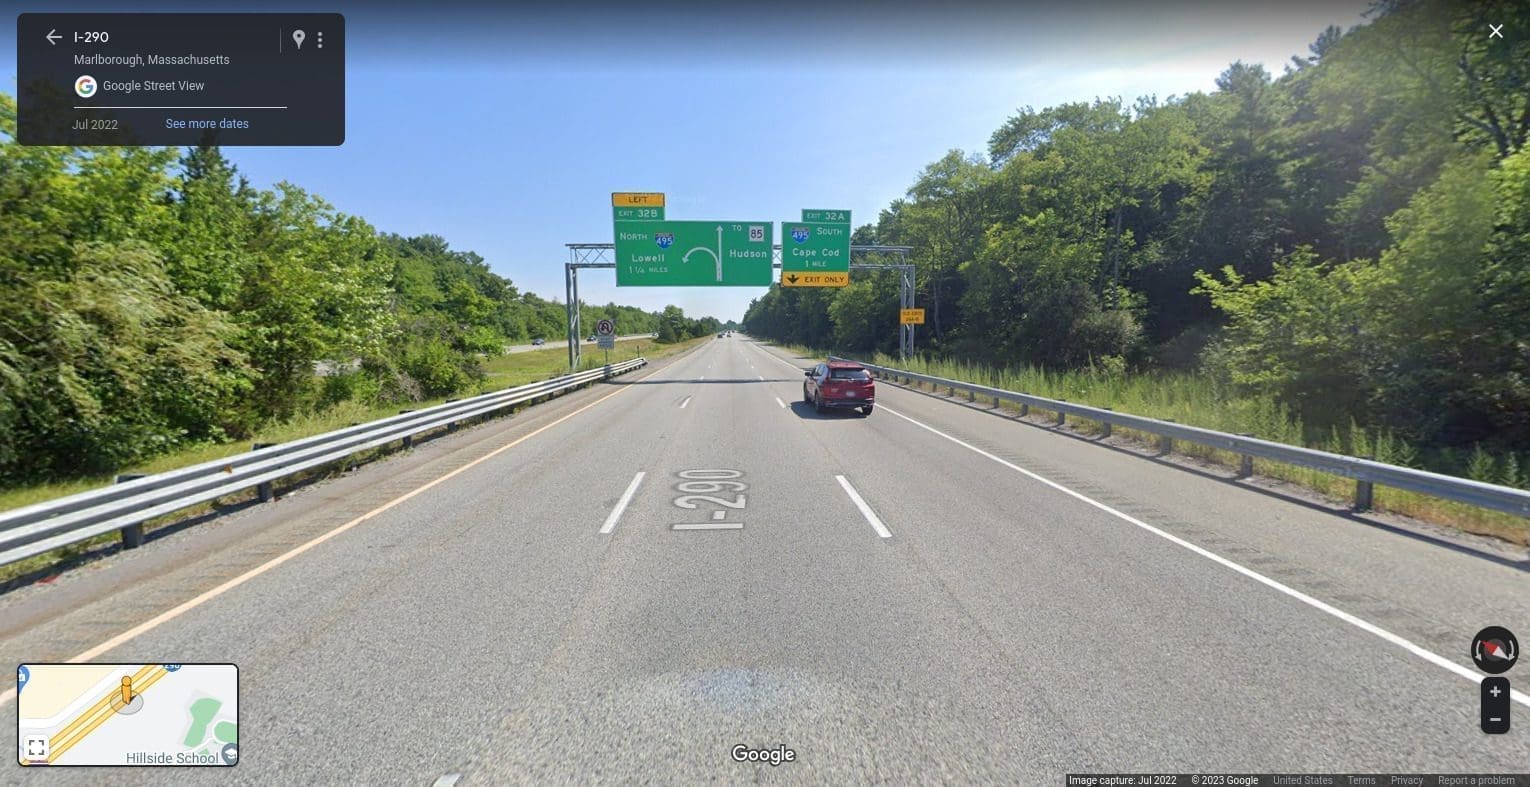 Google Streetview of highway sign overpass